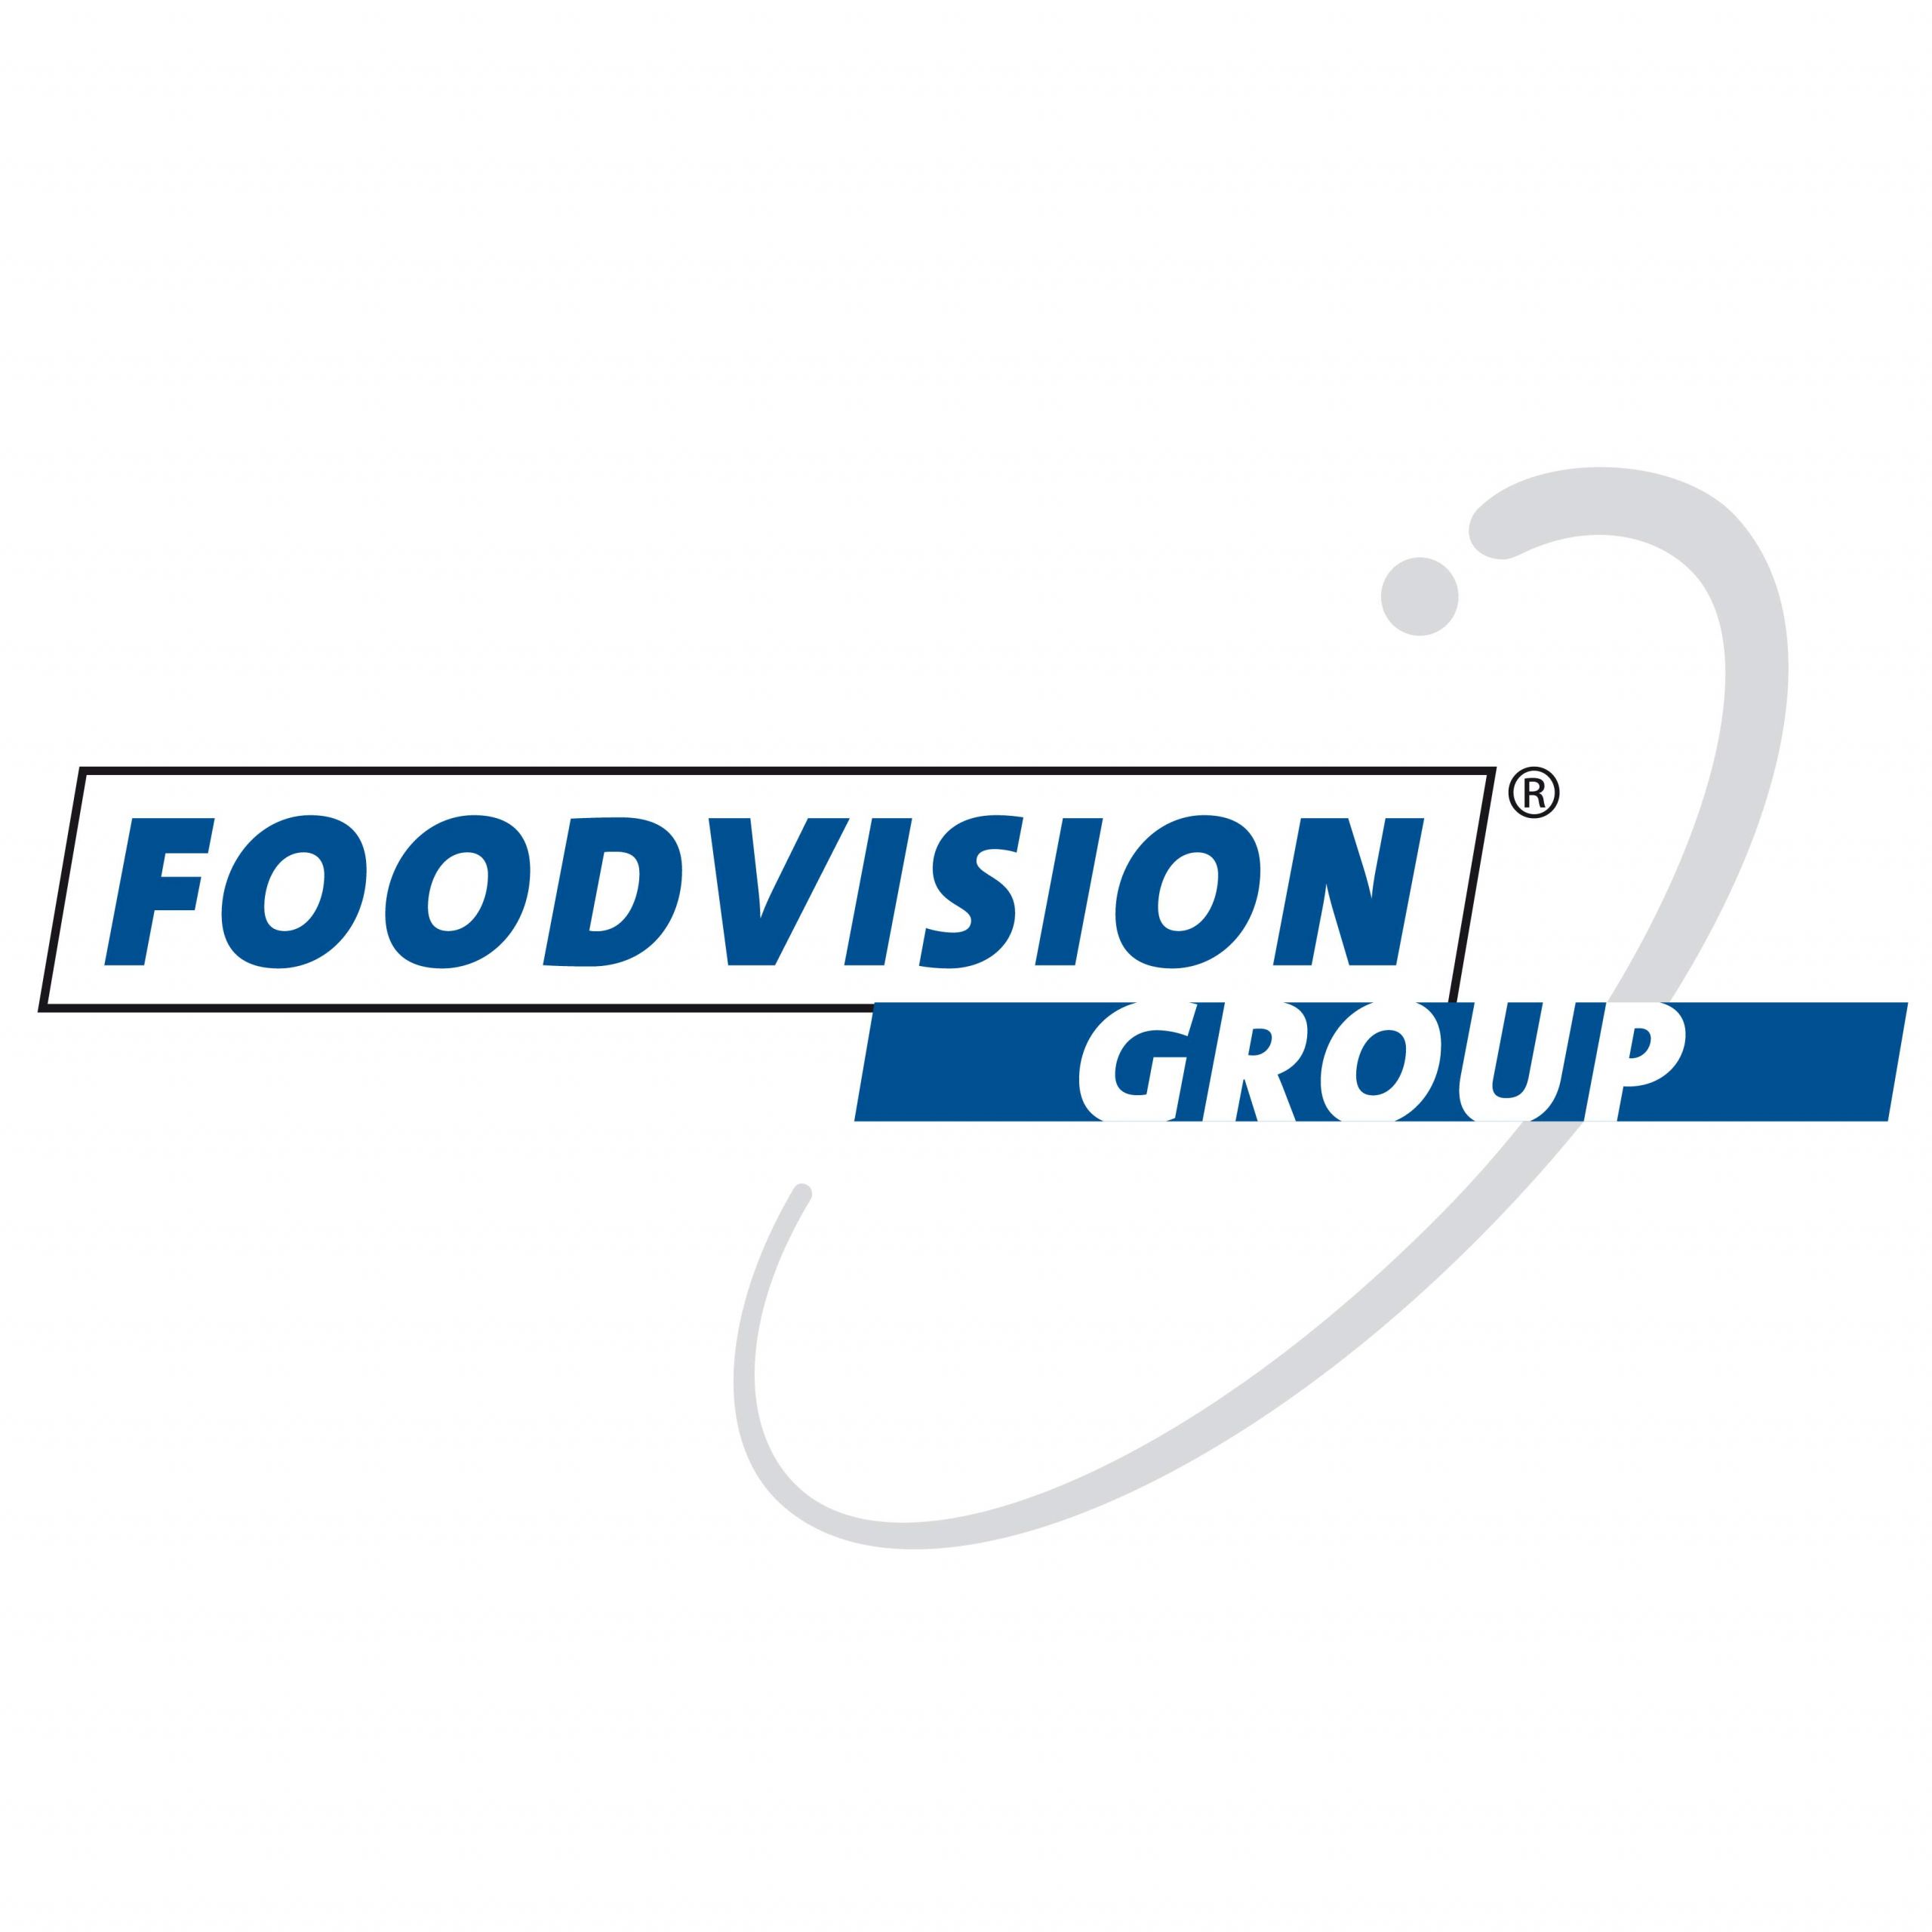 foodvision group 300dpi rgb